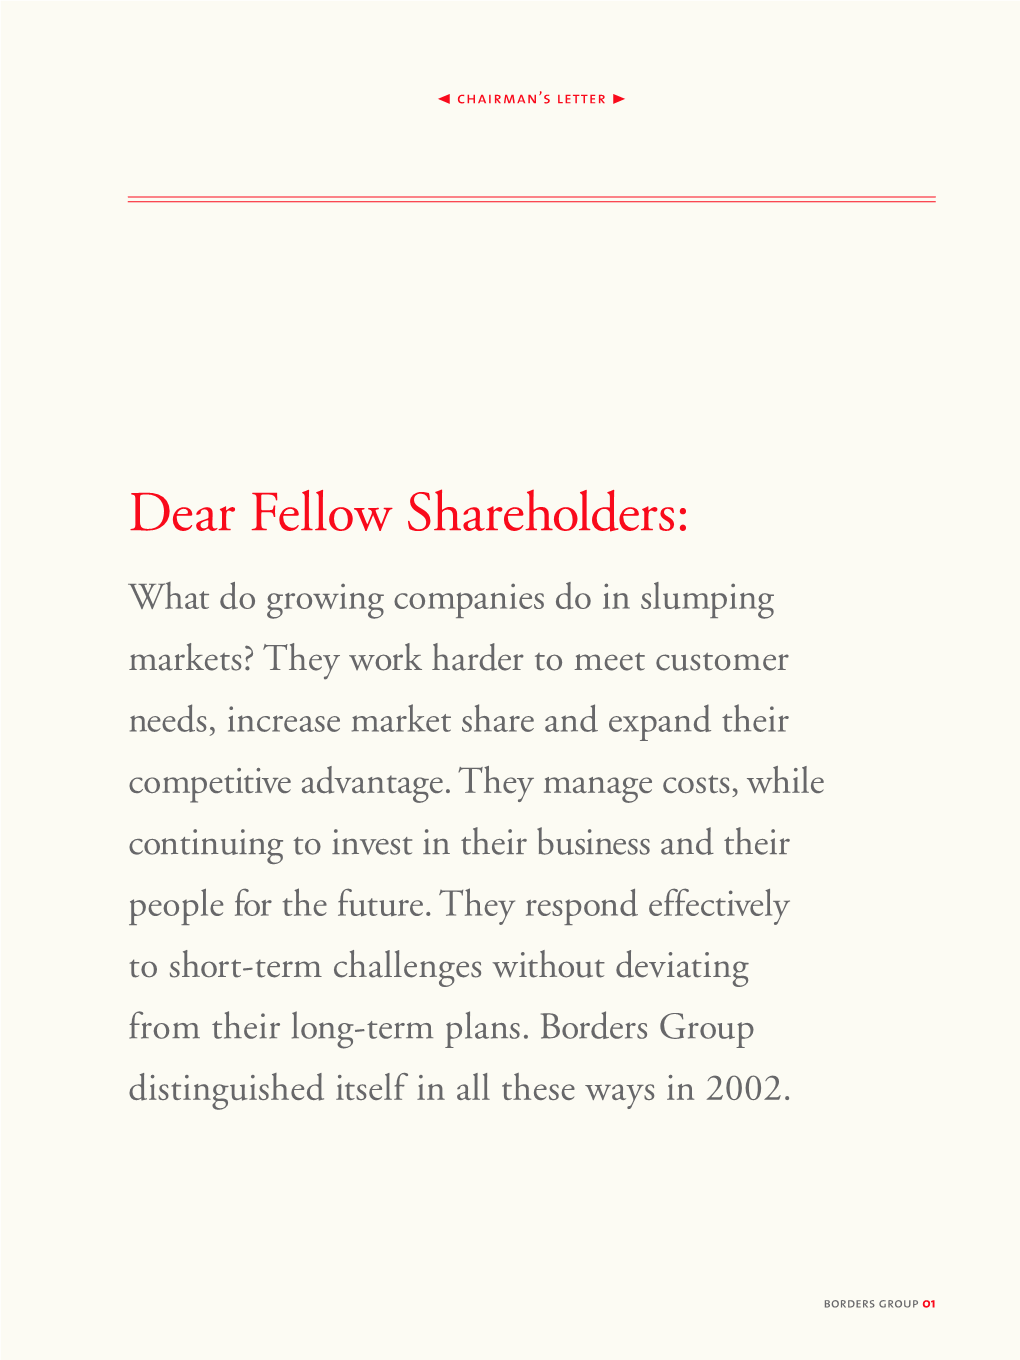 Print Letter to Shareholders (PDF)